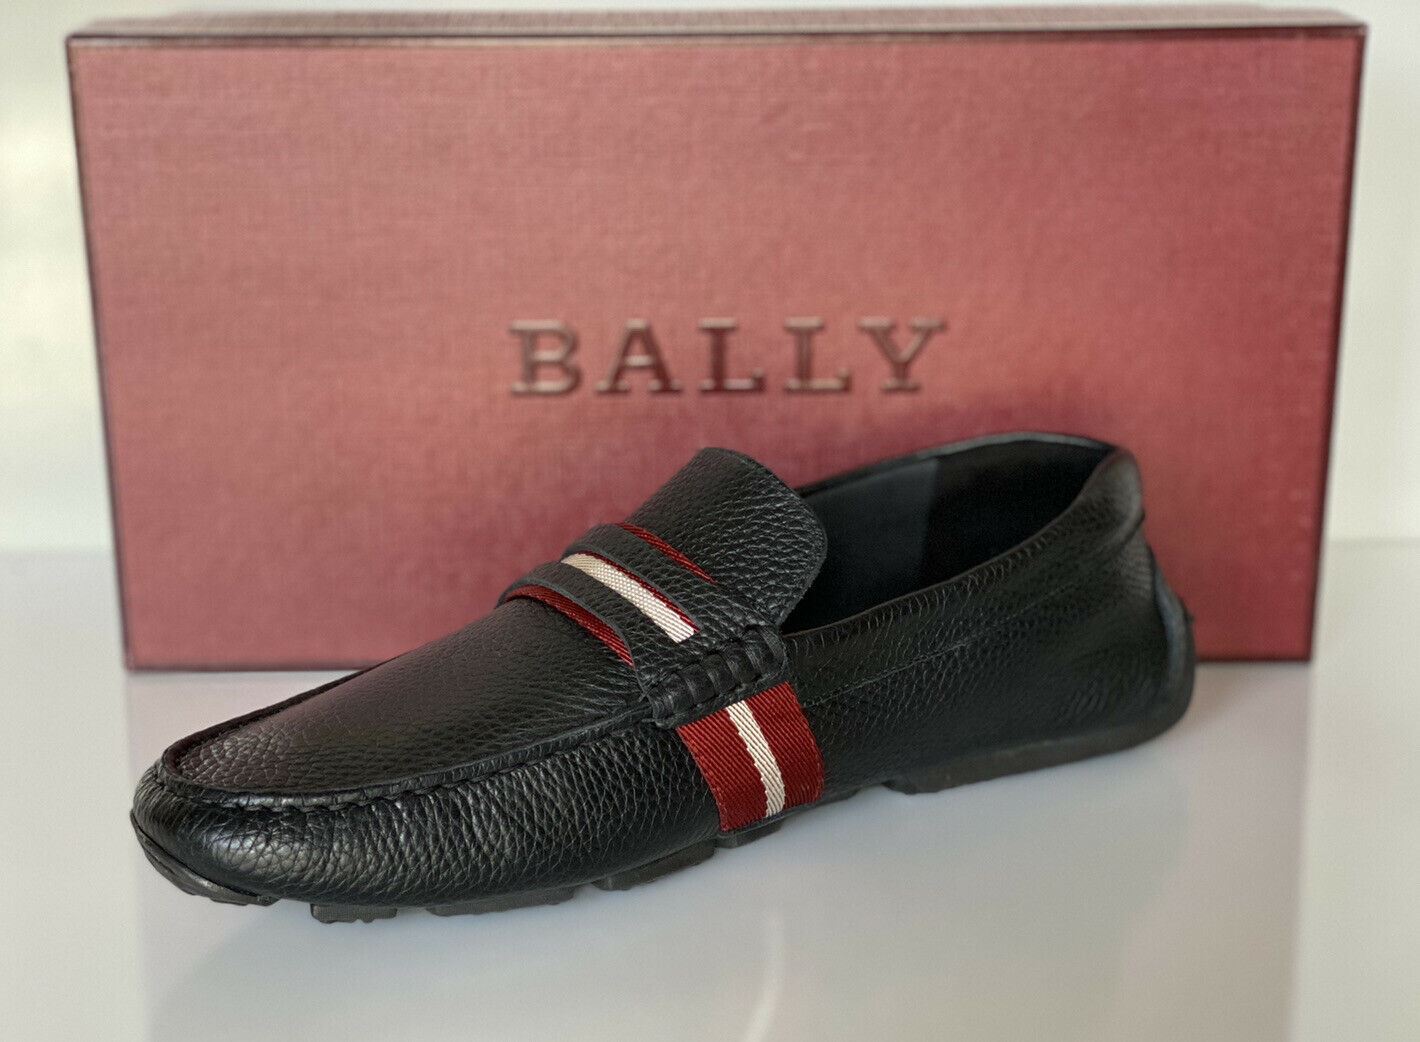 NIB Bally Mens Bovine Grained Leather Driver Shoes Black 9 EEE US 6228298 IT